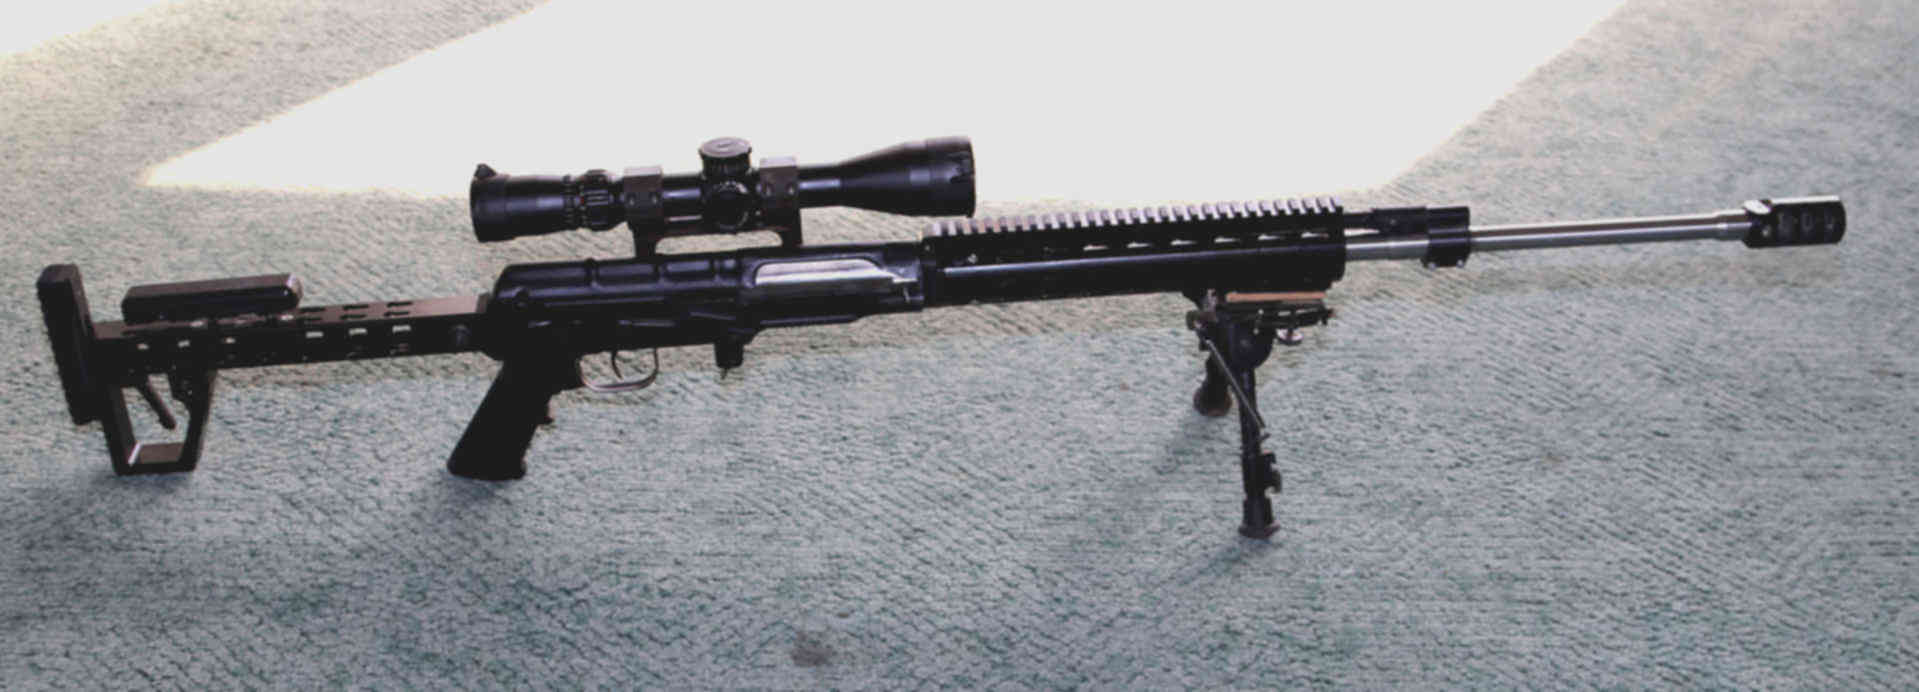 Свд м. Снайперская винтовка СВДМ. СВДМ-2 винтовка. СВД-М винтовка. Модернизированная снайперская винтовка СВДМ.